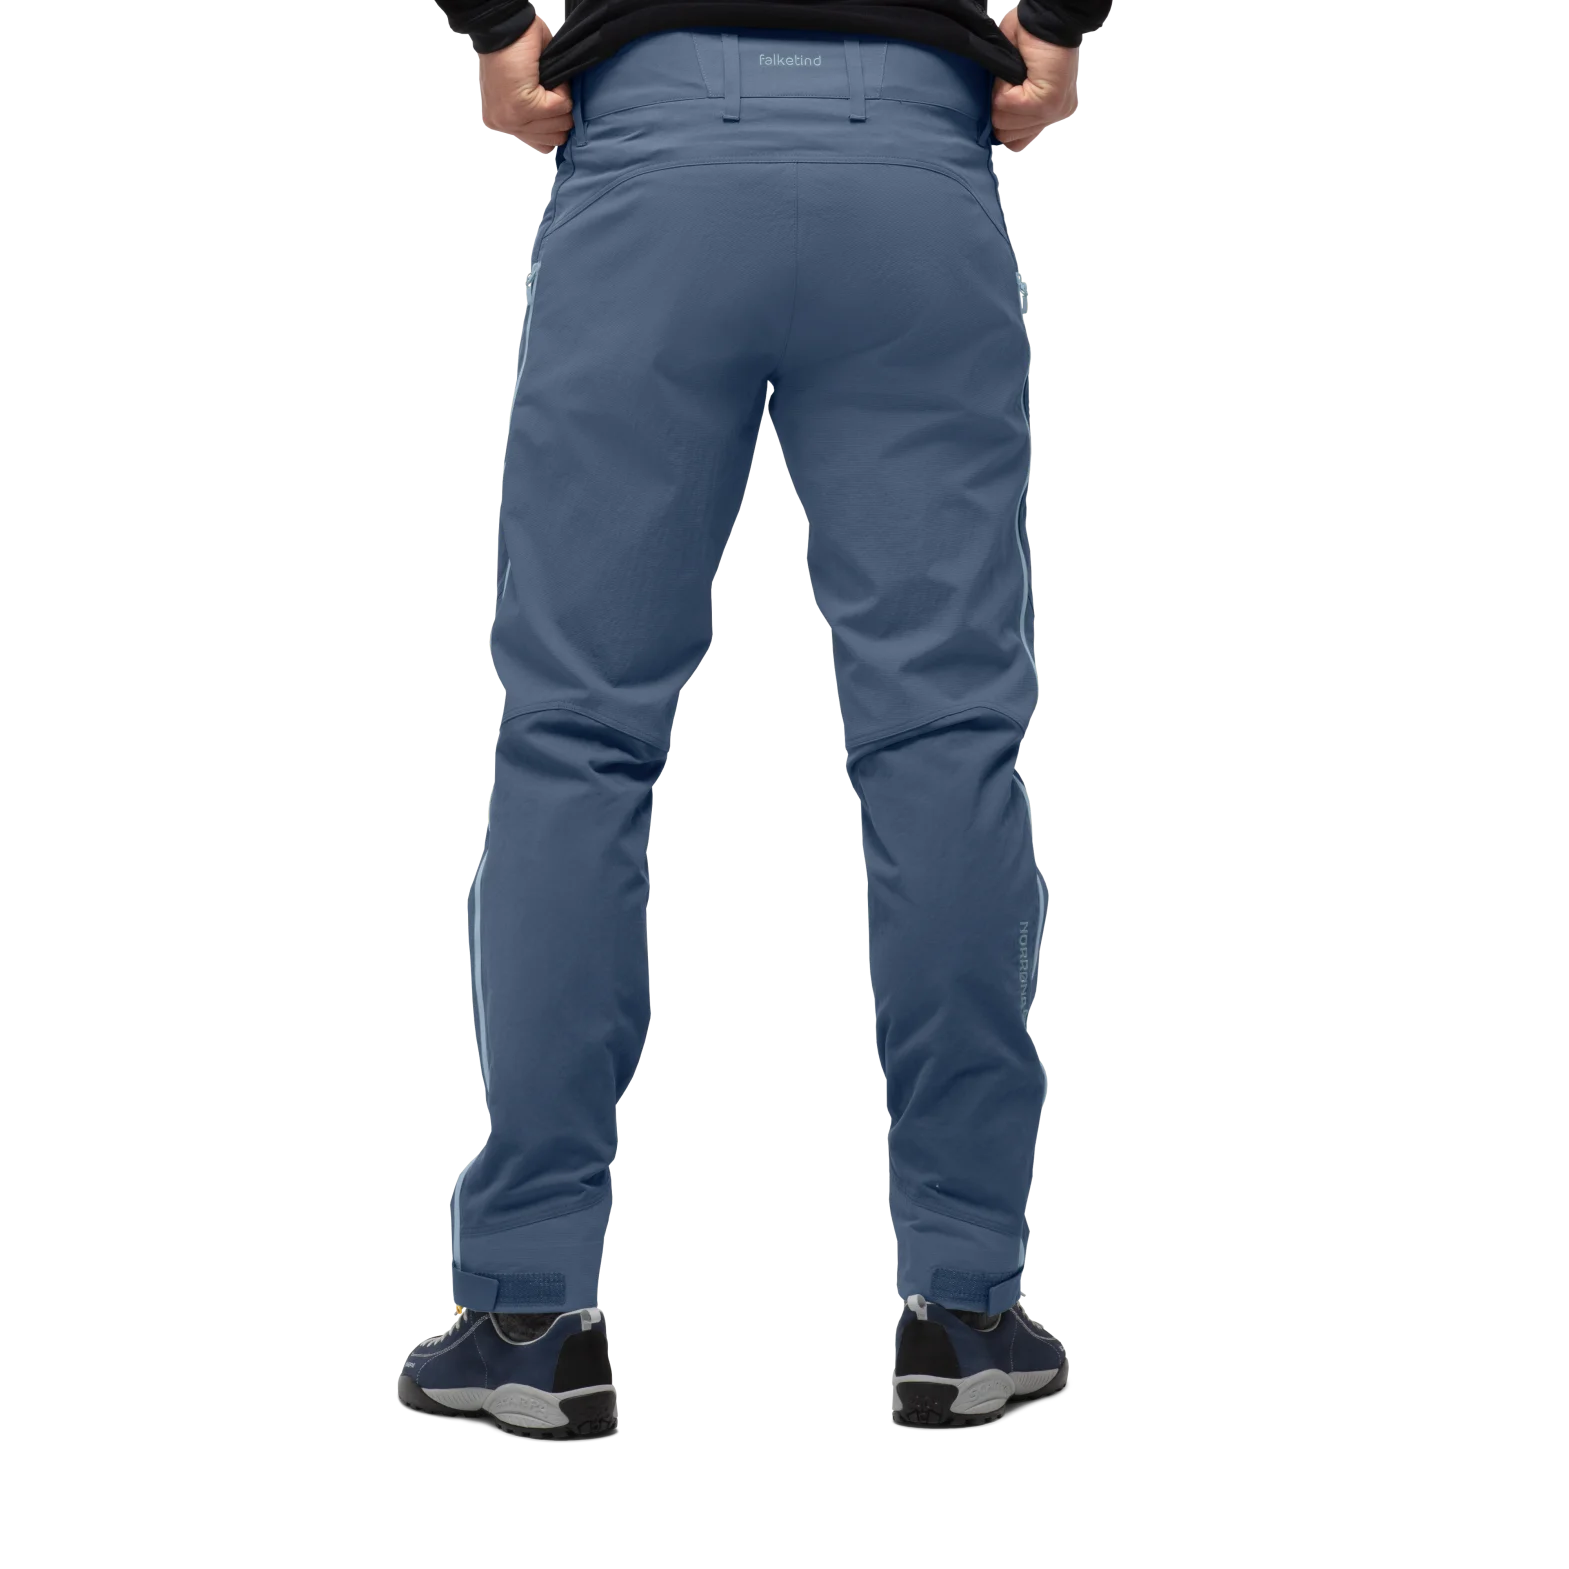 Men's Falketind Flex1 Heavy Duty Pants (Past Season)